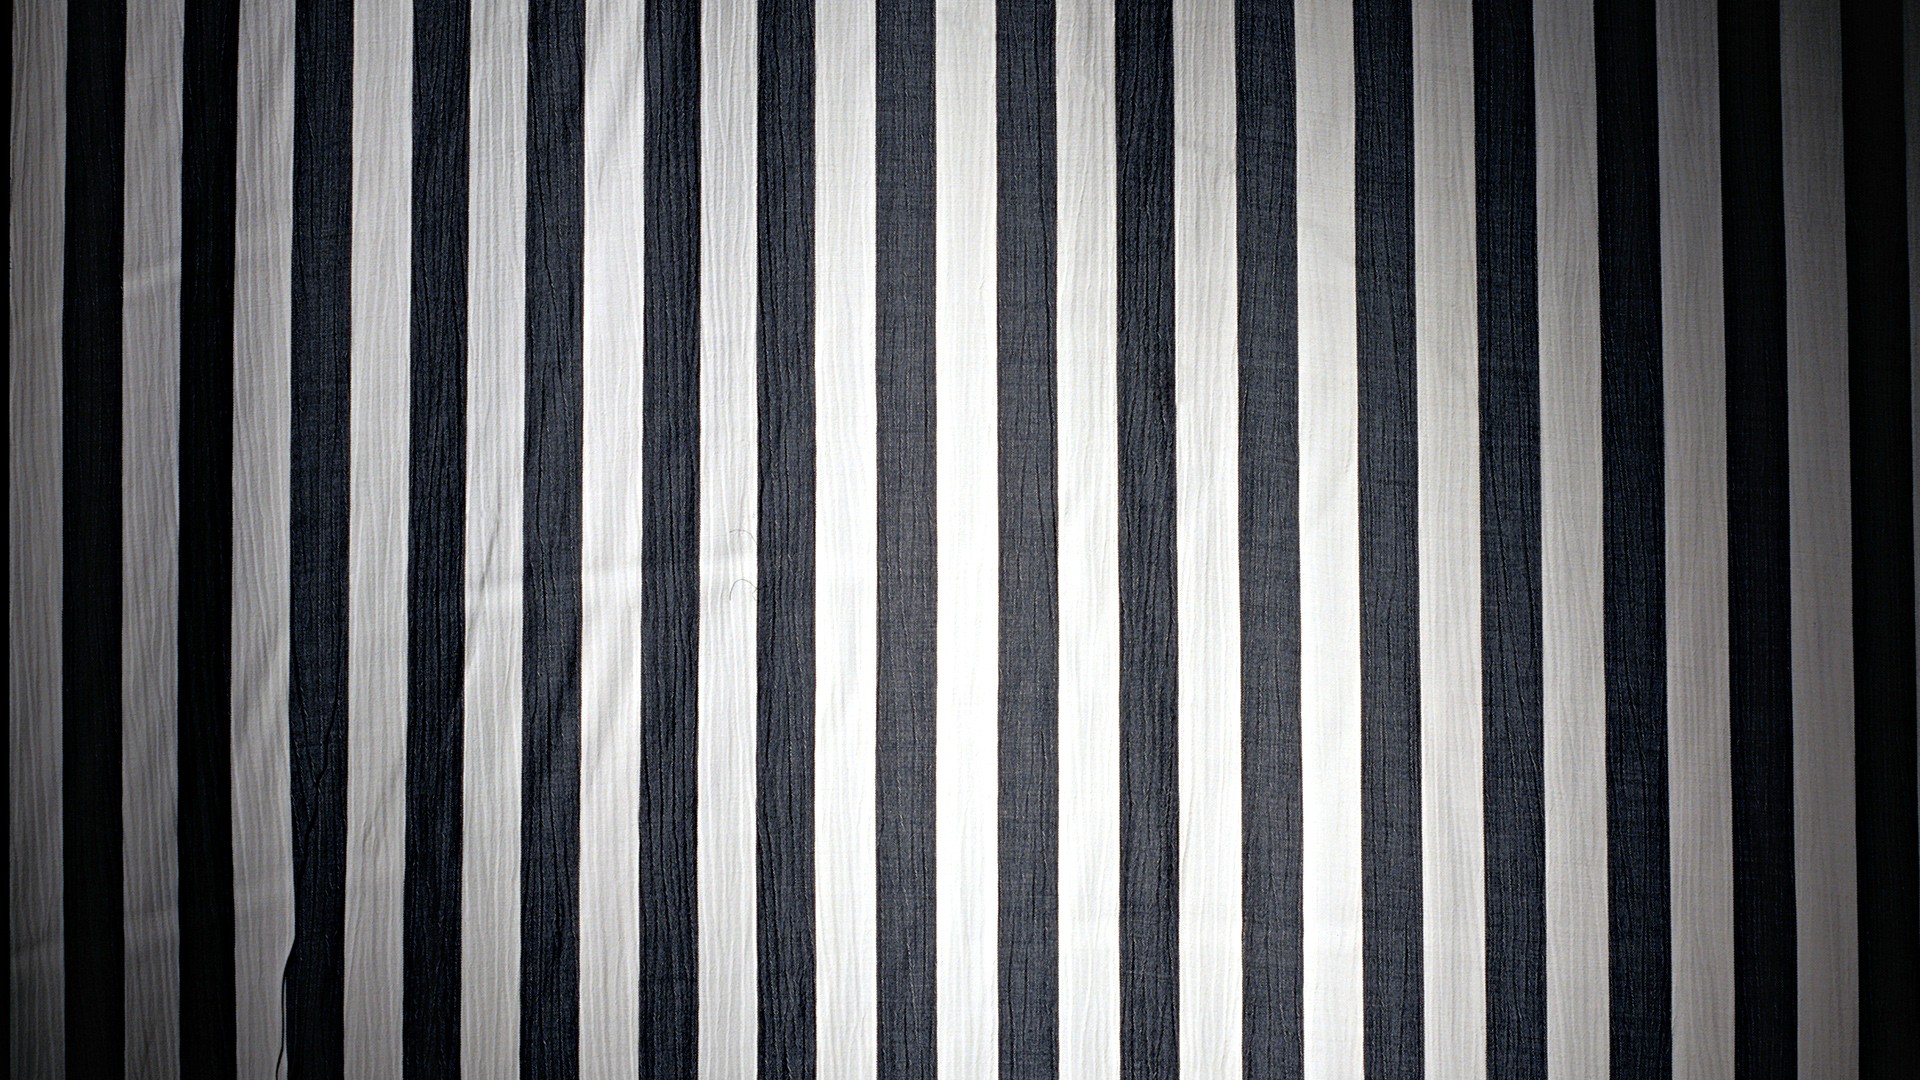 Wallpaper Striped Patterns Zebra Image